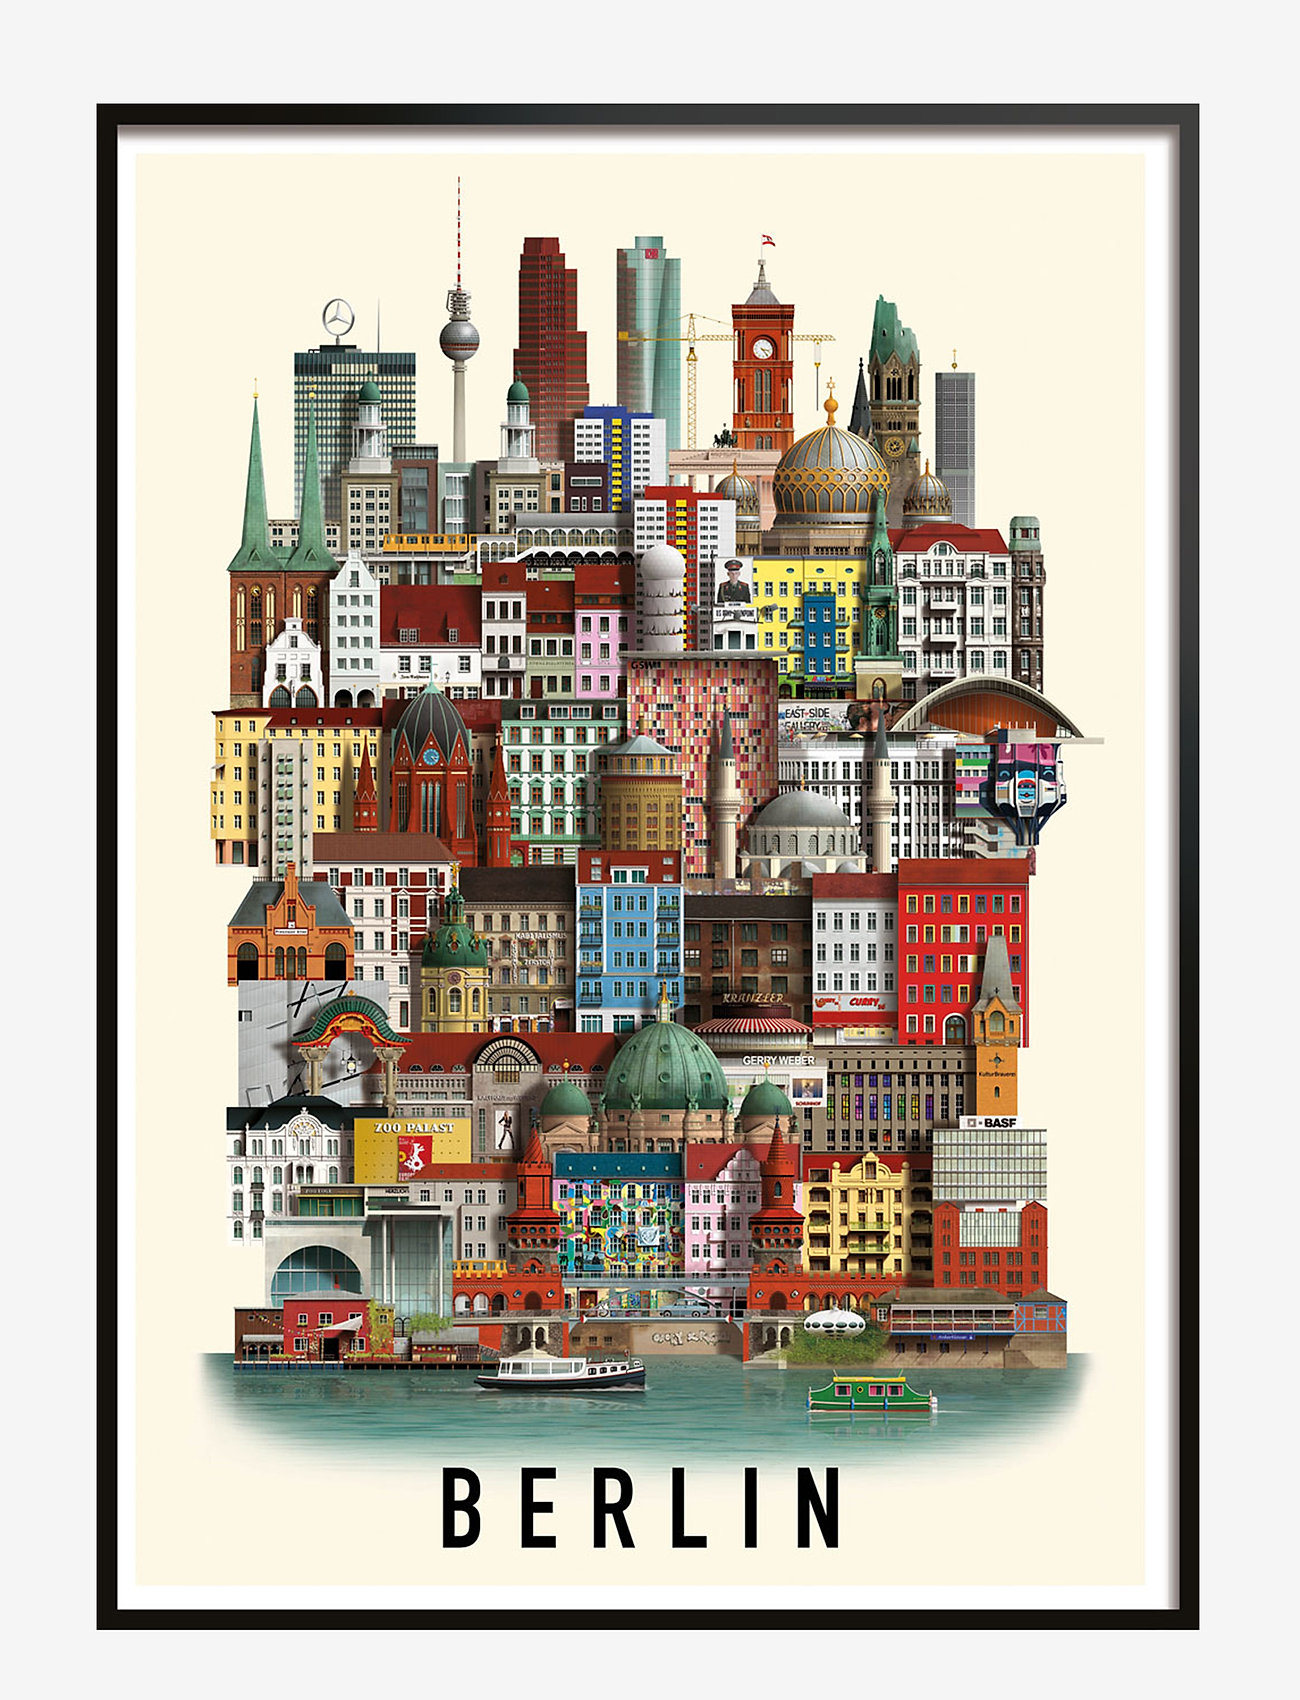 Martin Schwartz - Berlin small poster - cities & maps - multi color - 0